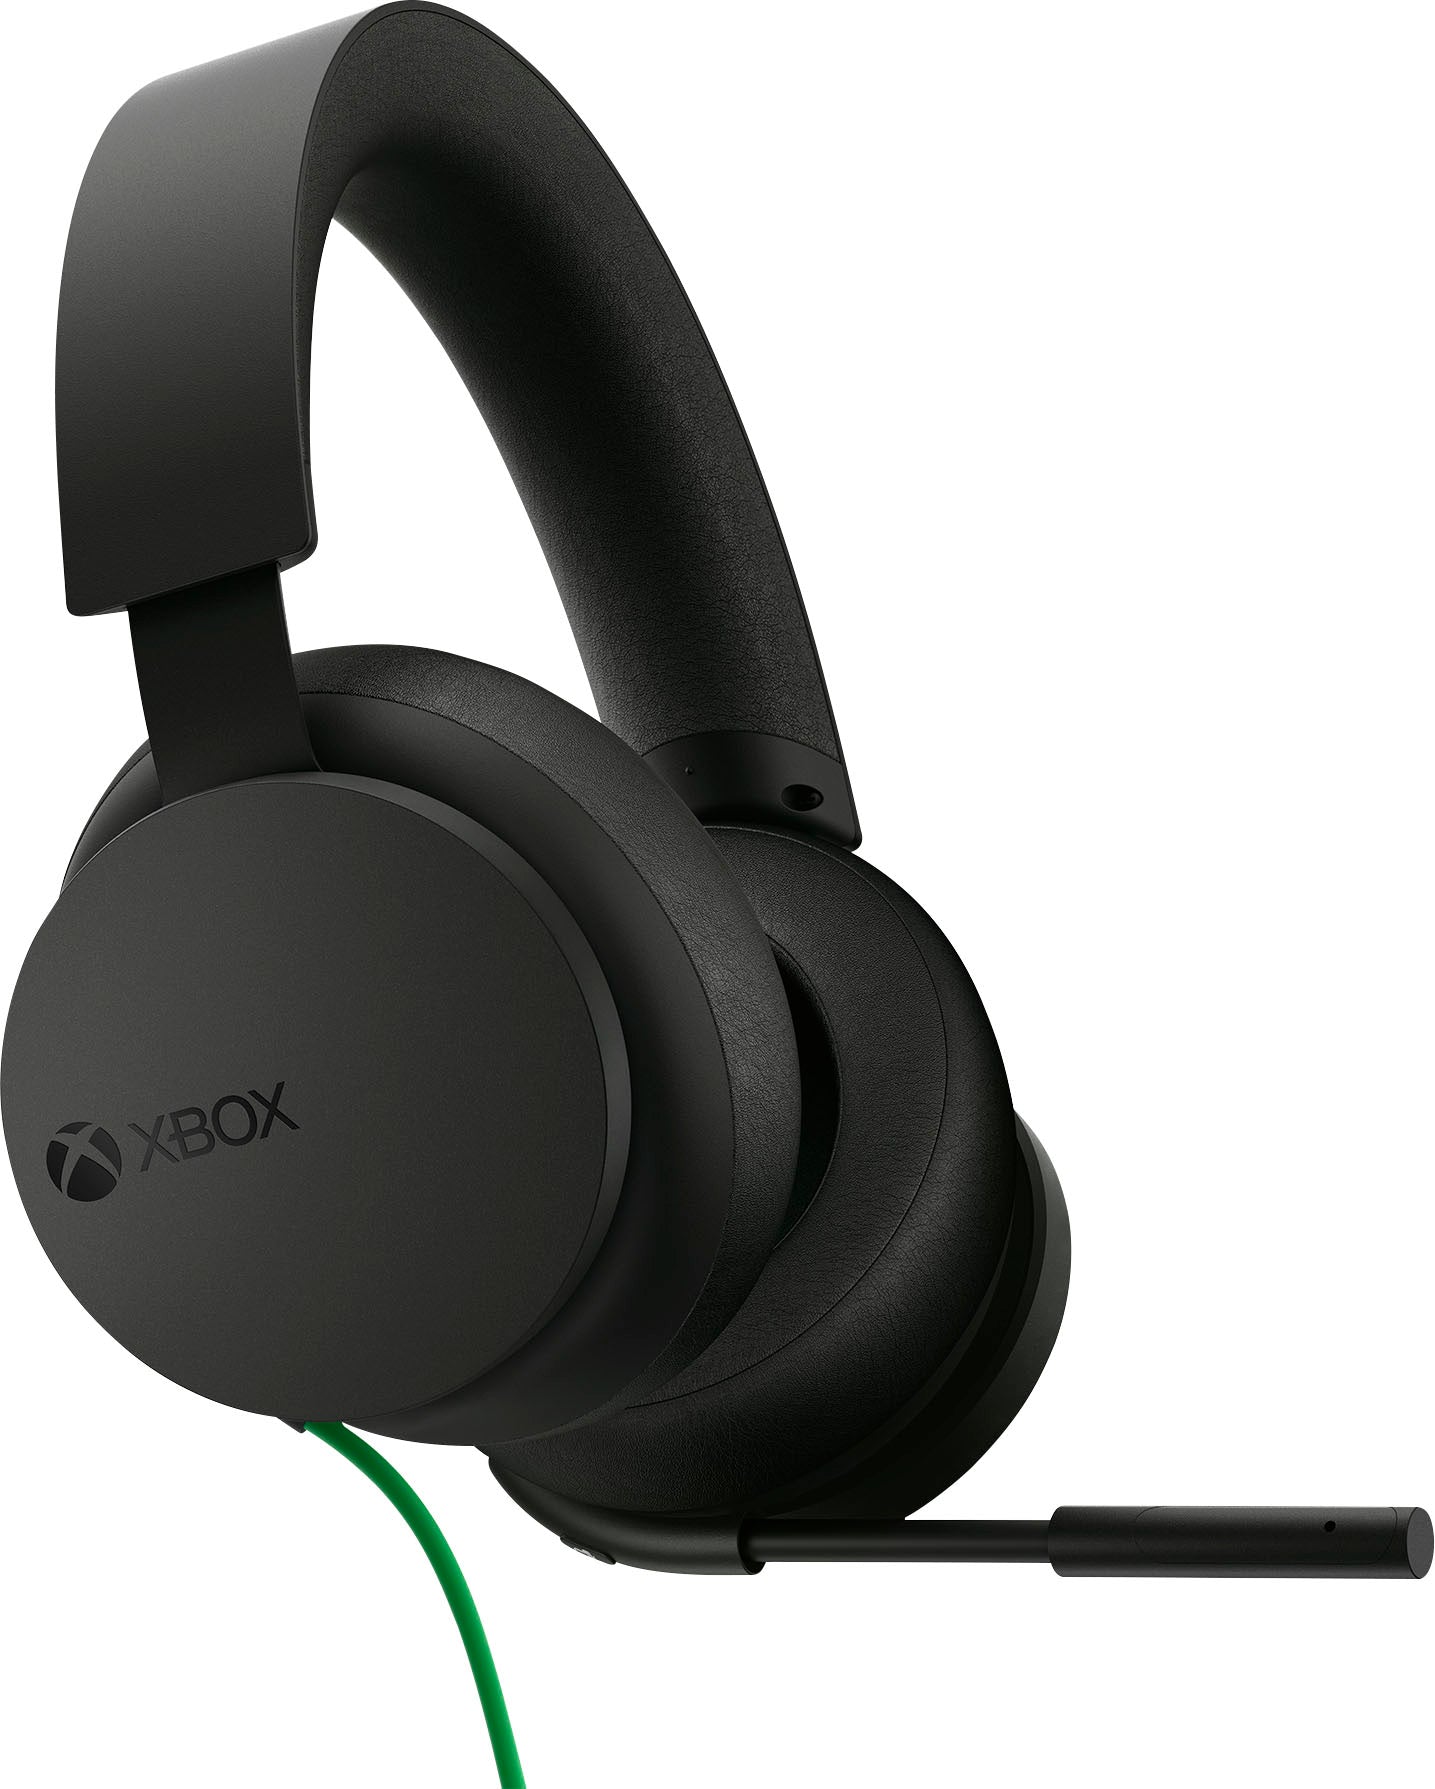 Microsoft - 8LI-00001 Xbox Stereo Headset for Xbox Series X|S, Xbox One, and Windows 10/11 Devices - Black